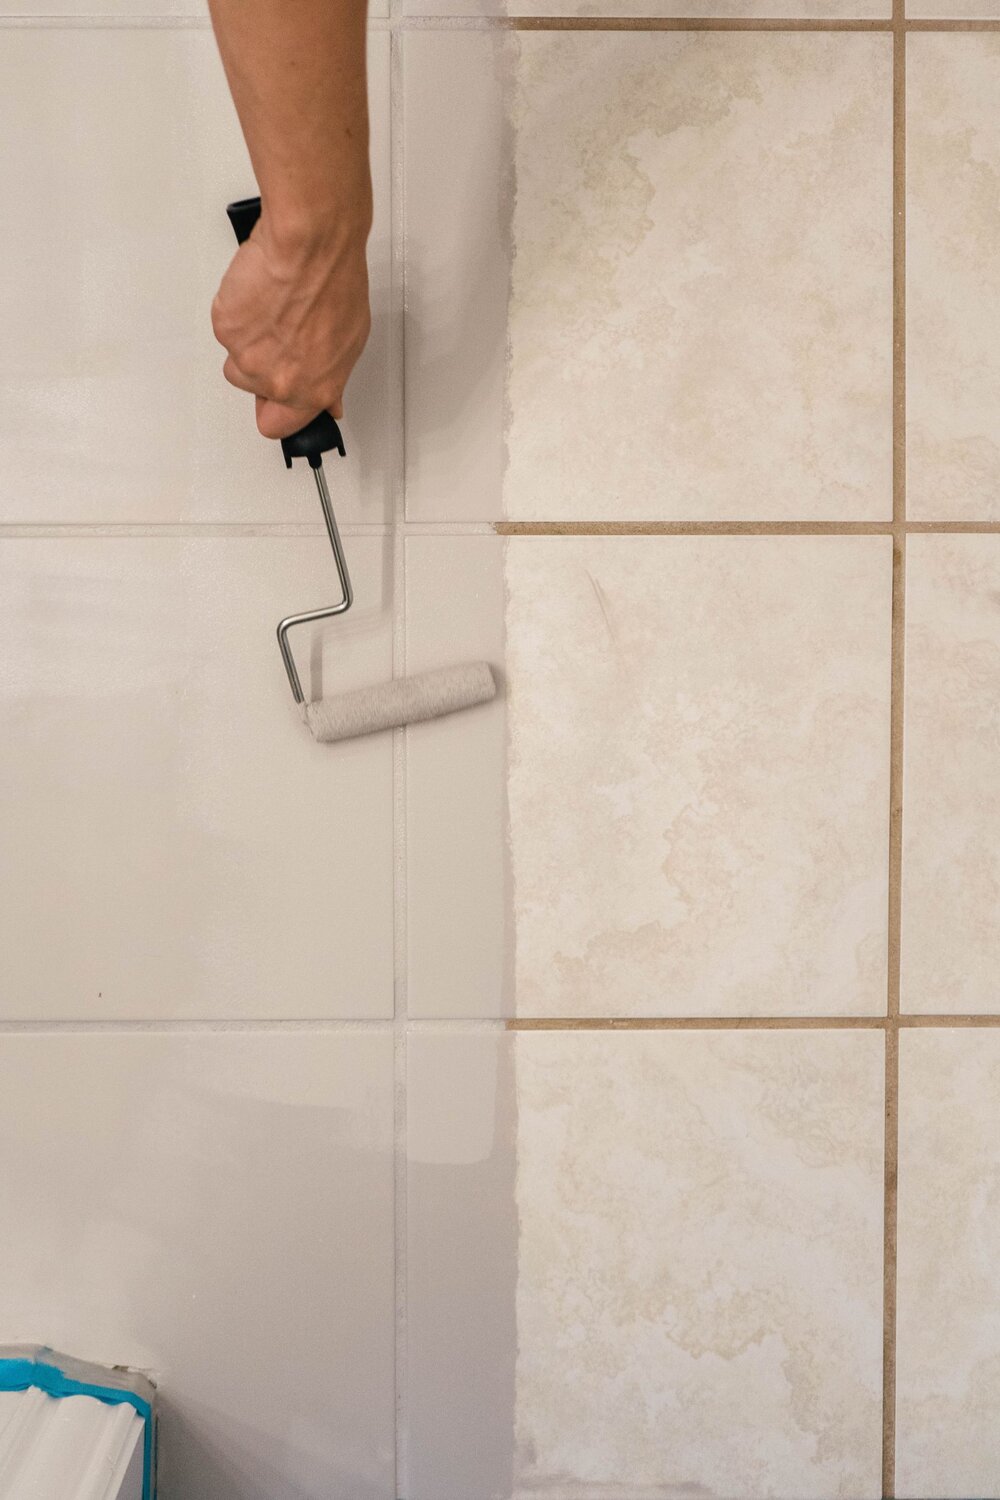 Diy How To Paint Ceramic Floor Tile, Can You Paint Tile Floor